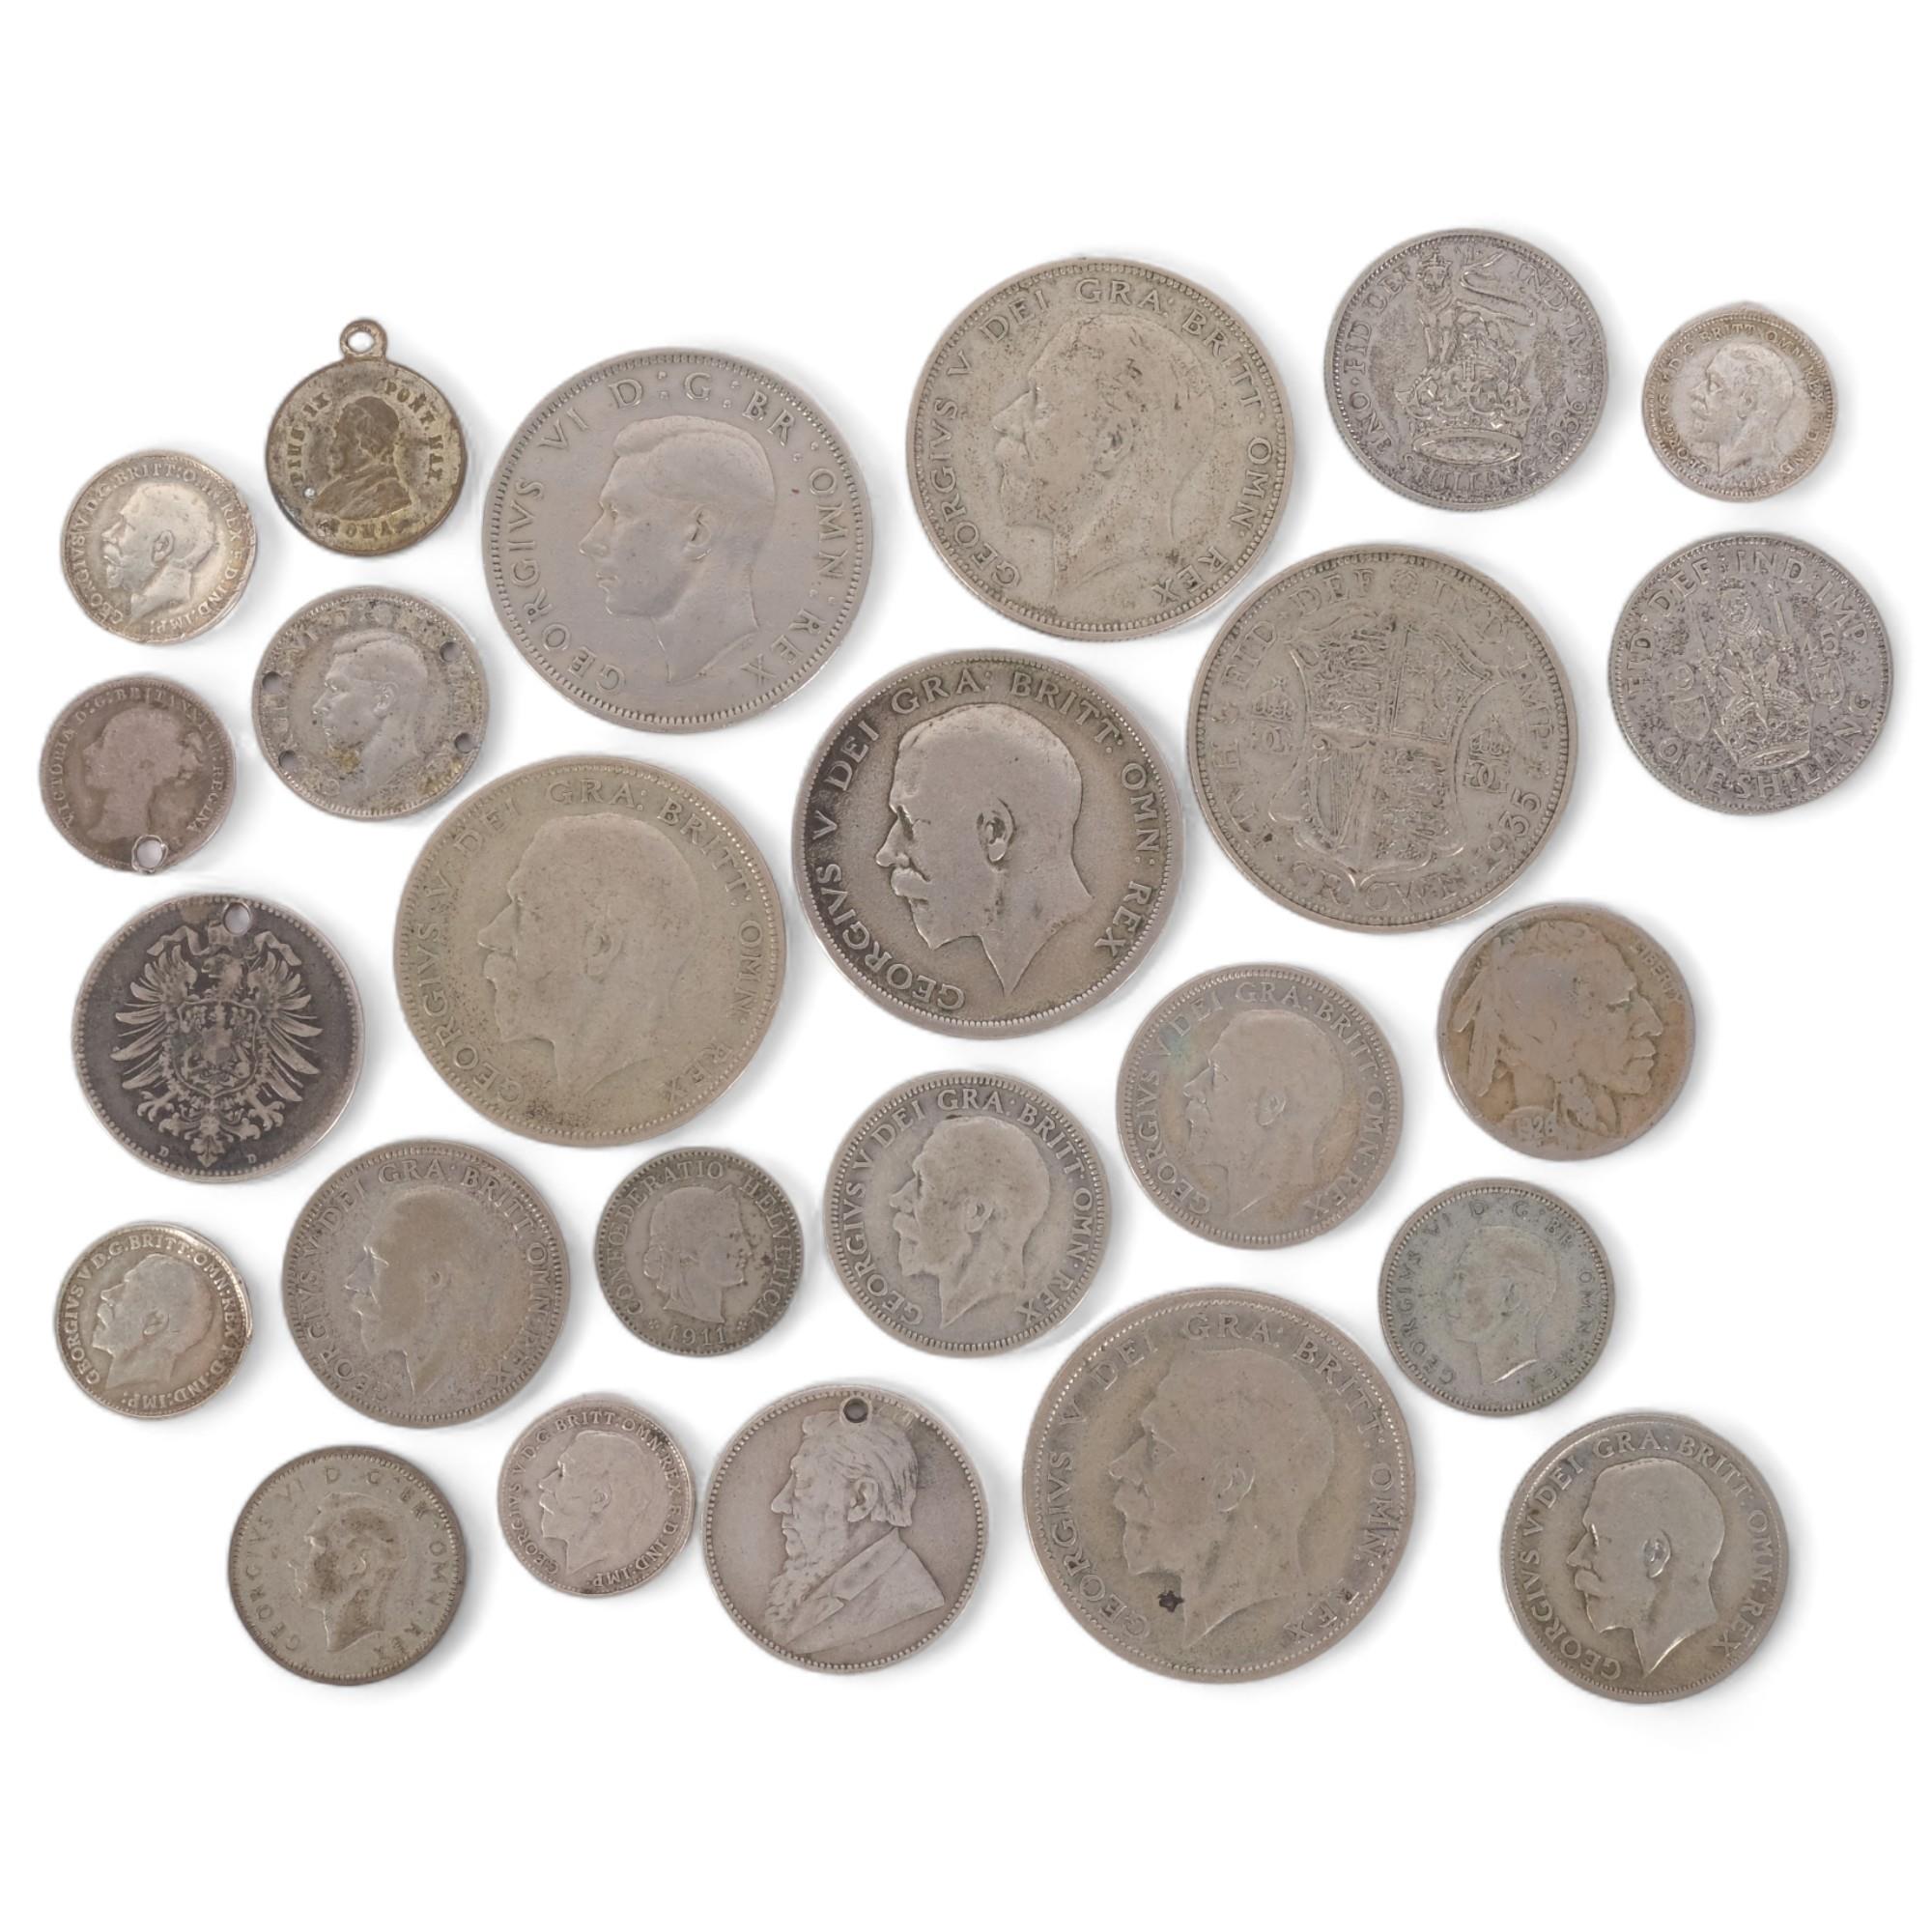 A collection of English pre-decimal silver coins